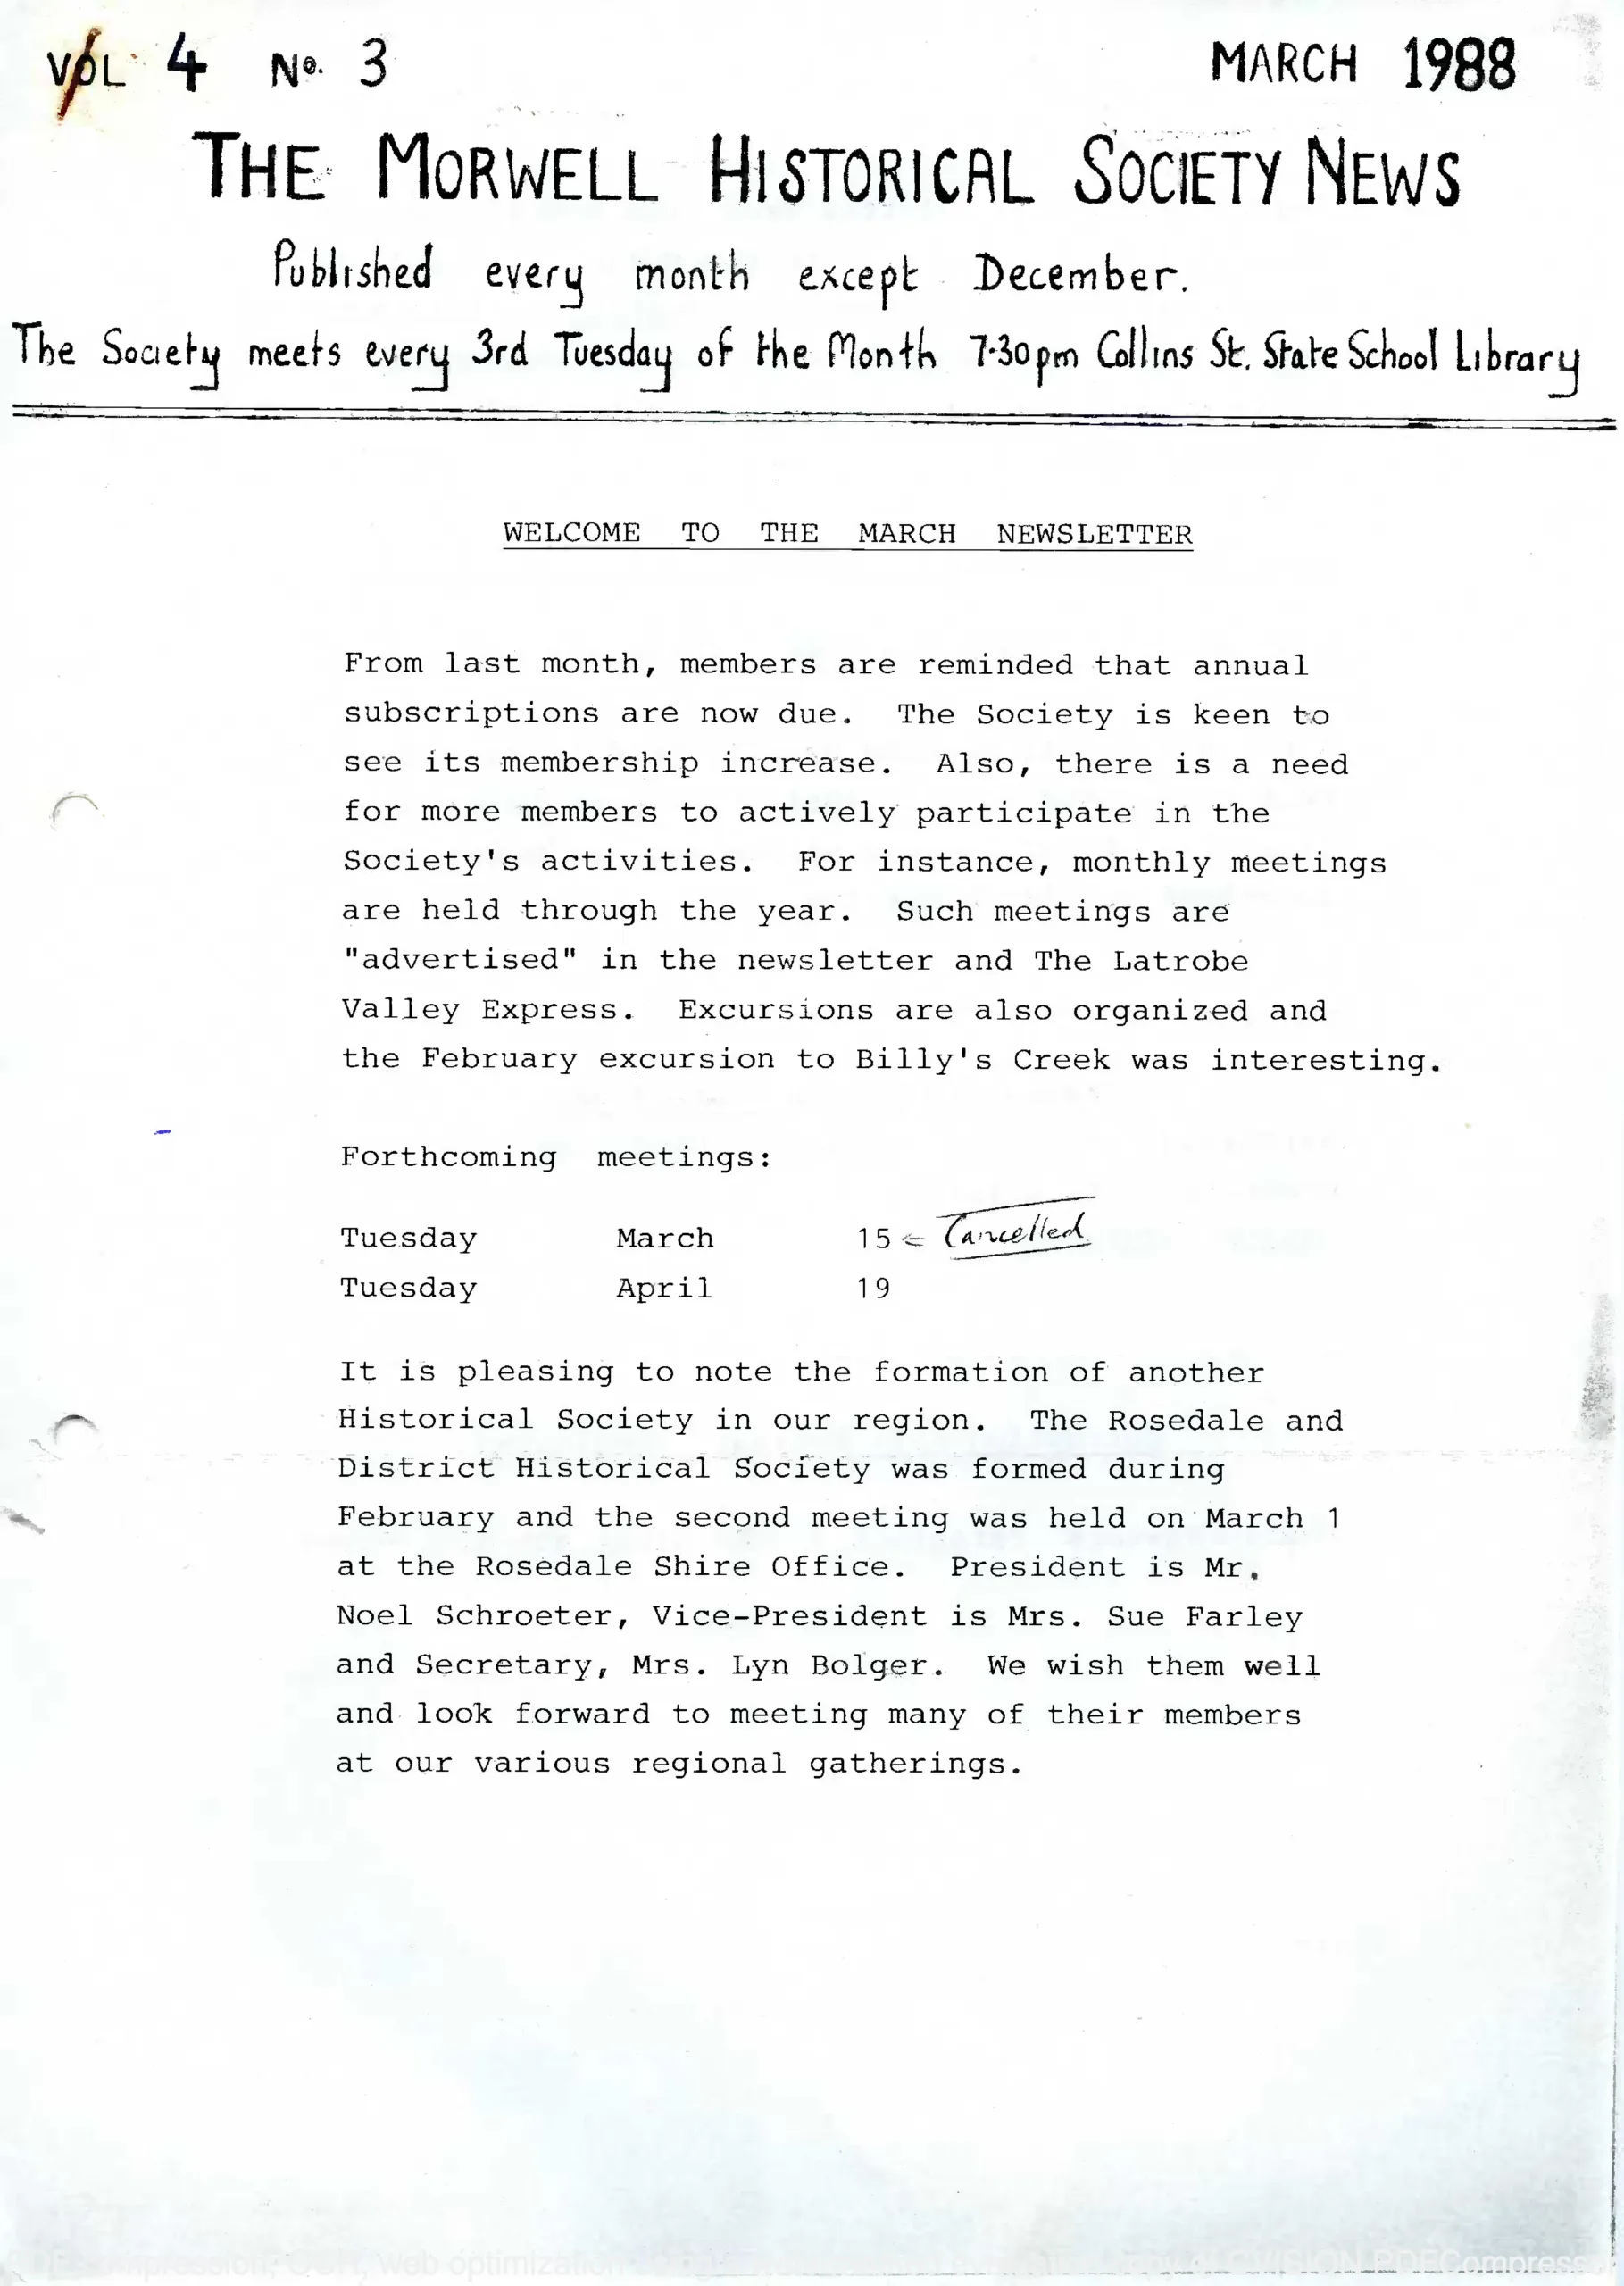 Newsletter March 1988